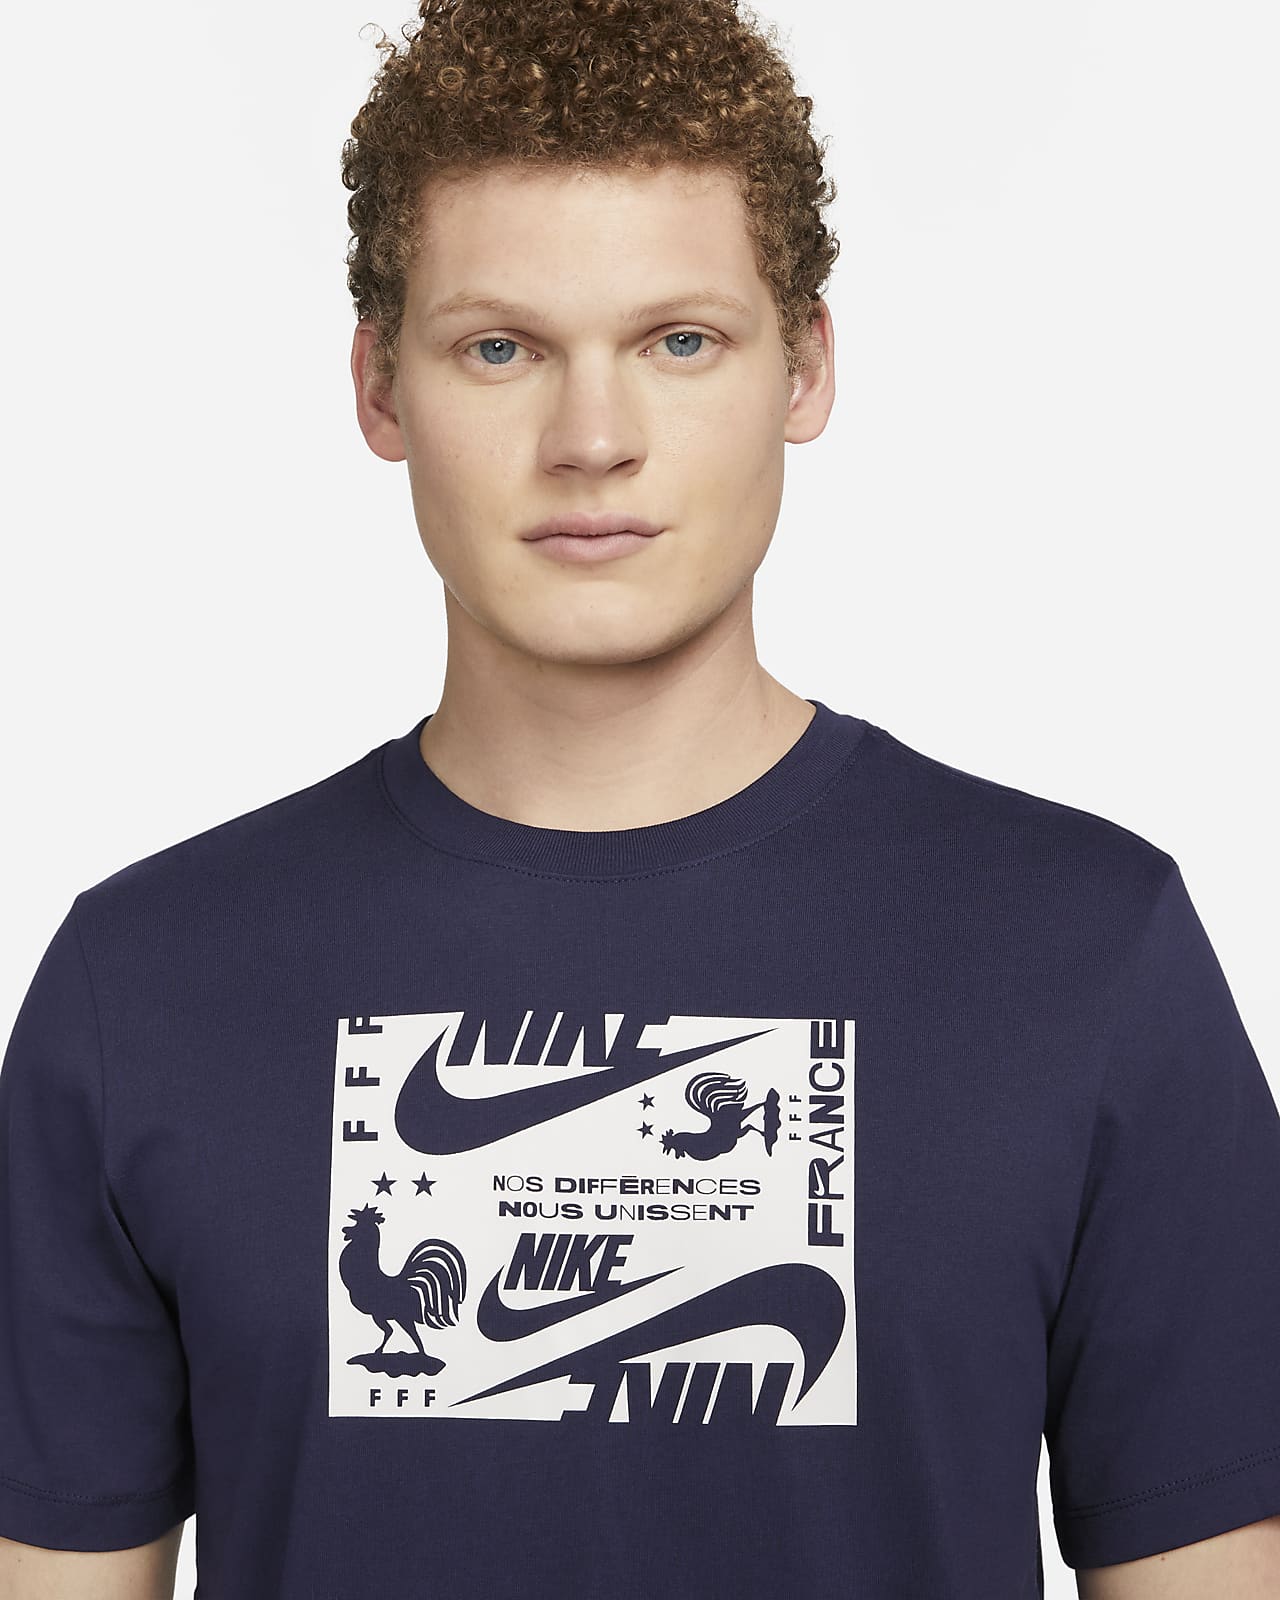 Ultrasport Rainbow T-Shirt de compression Homme – ULTRASPORT FRANCE – Nr. 1  marque Sport et Fitness sur